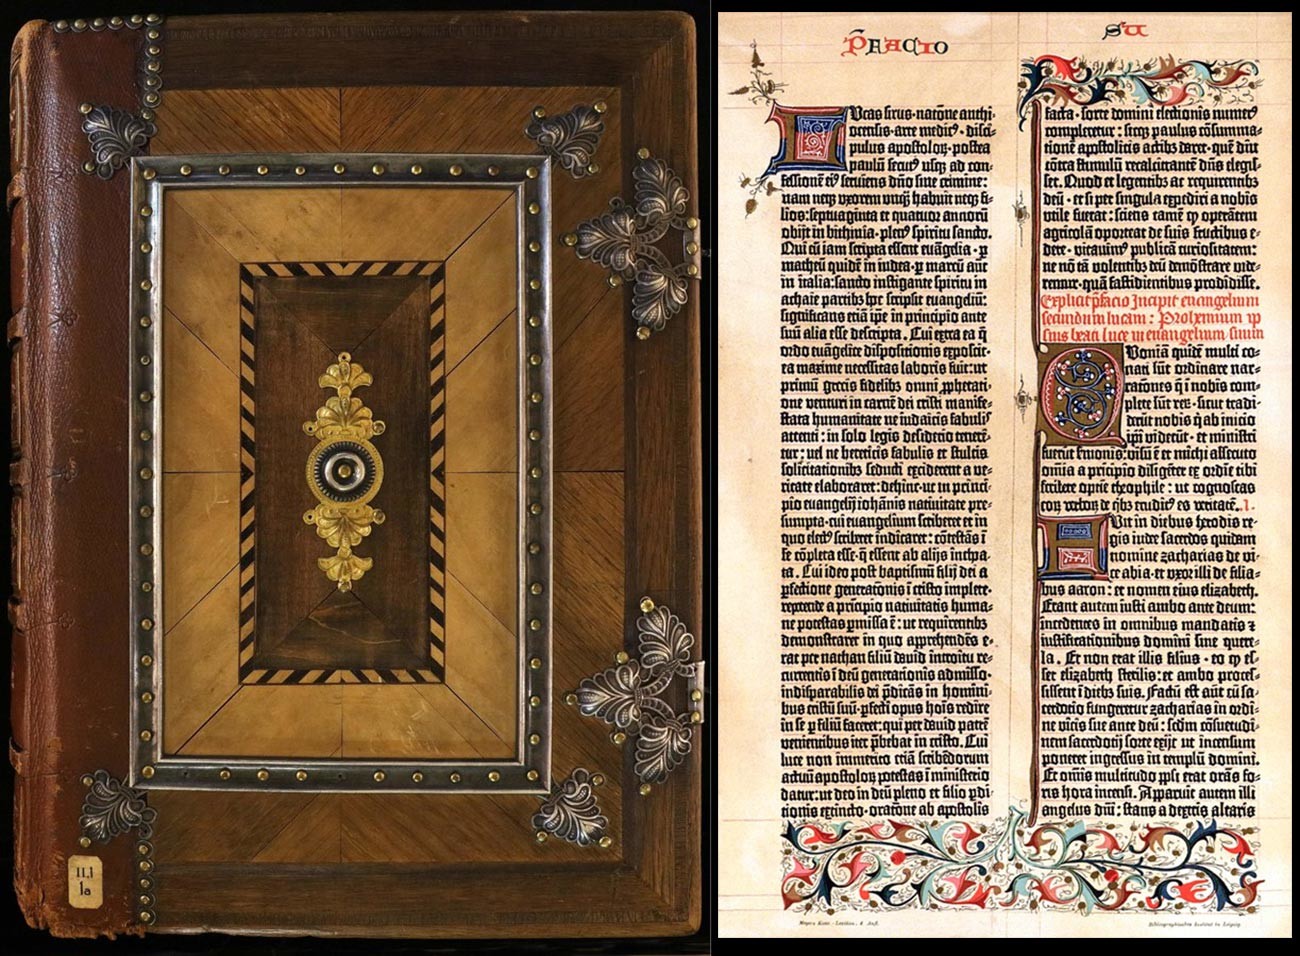 Die Gutenberg-Bibel